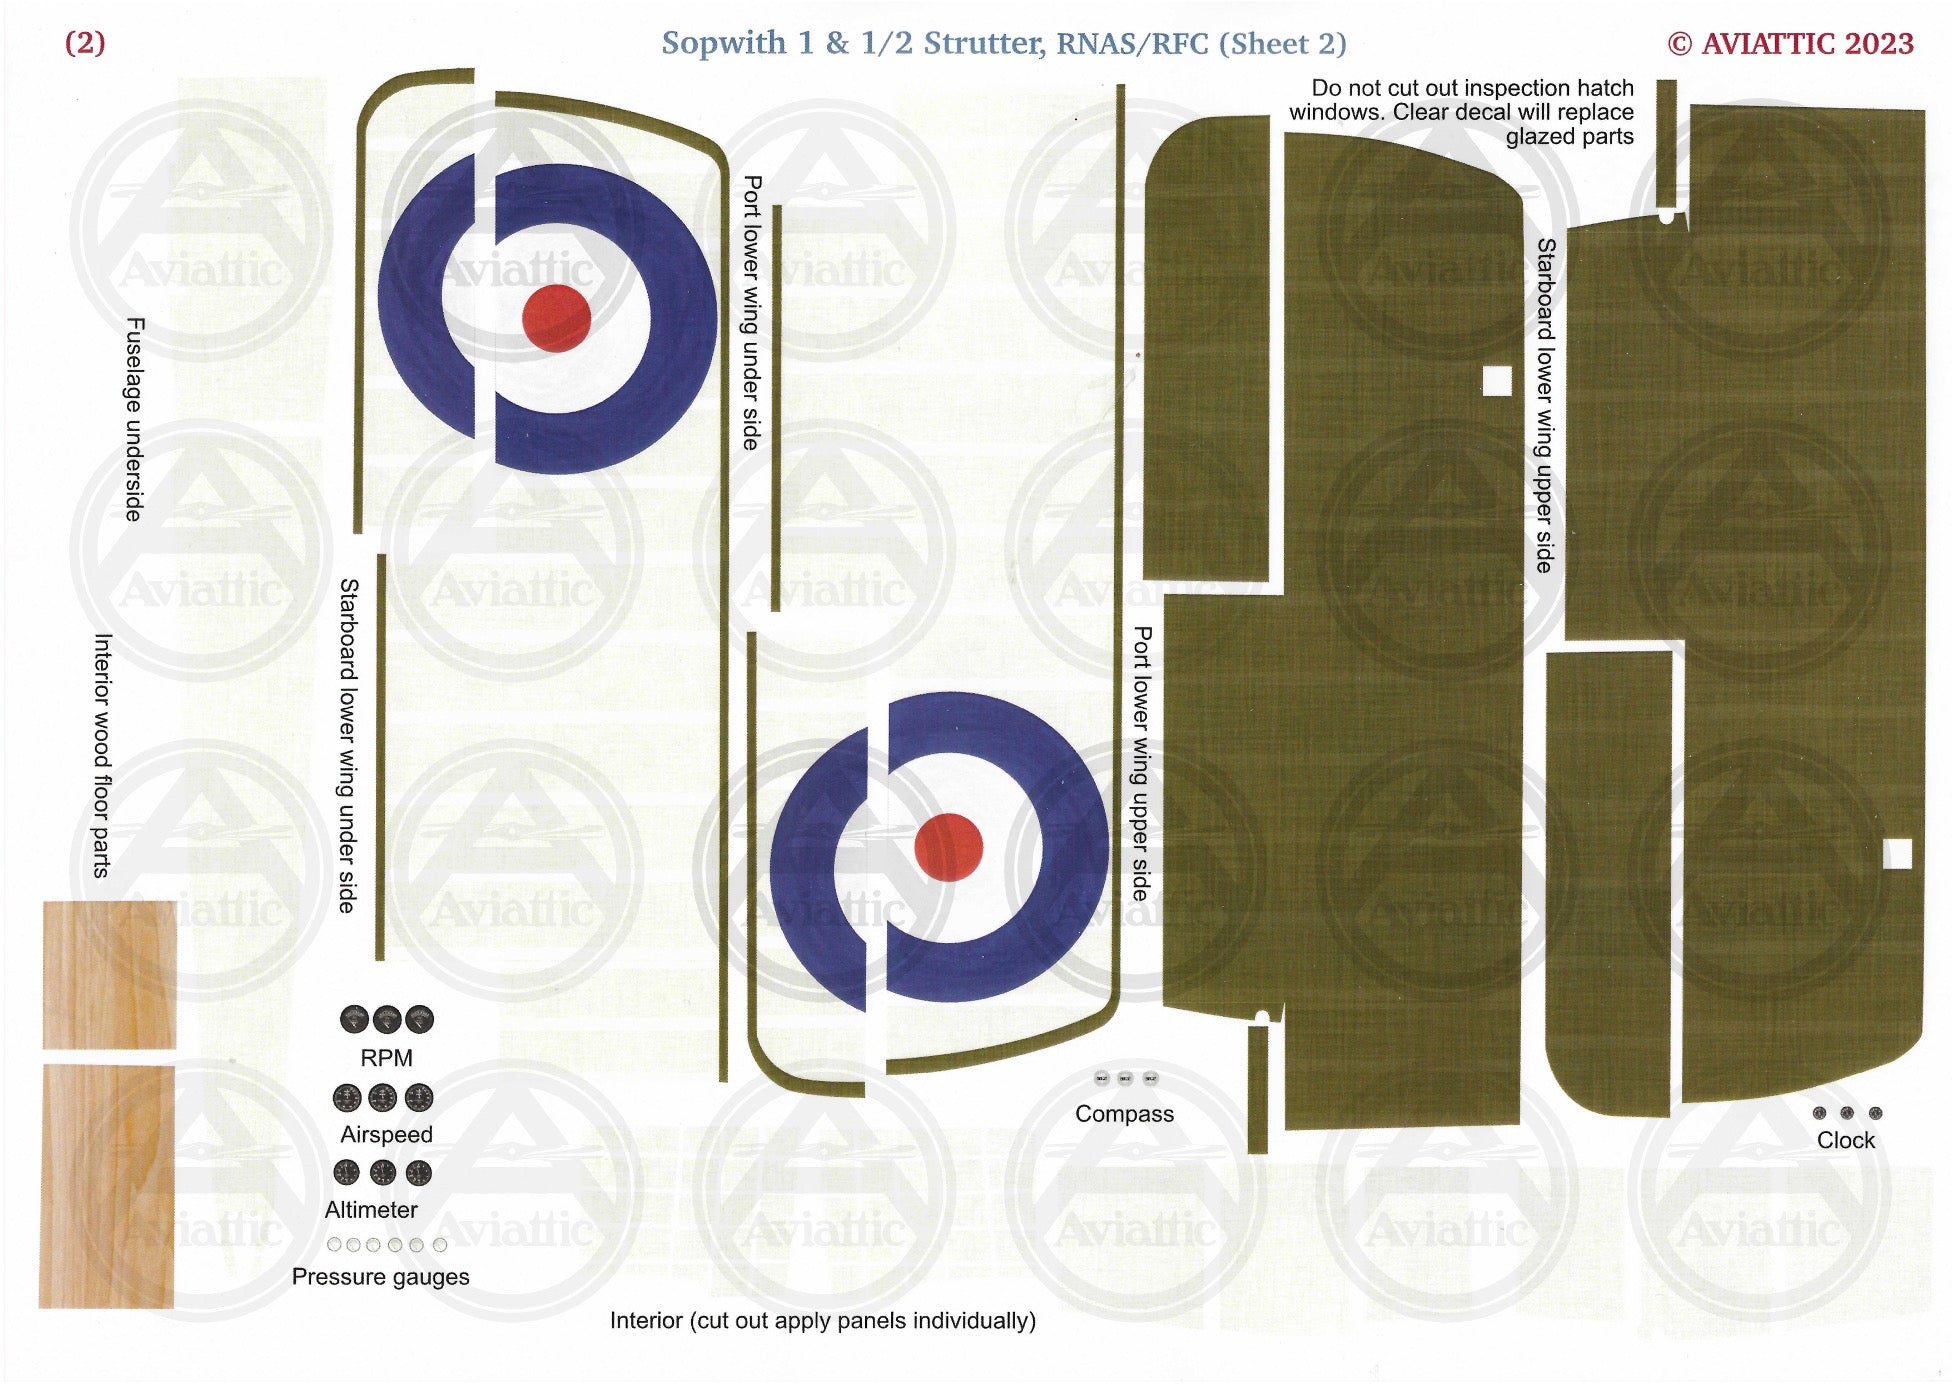 1/32 - Roden - Sopwith 1 & 1/2 Strutter - A993 - 2nd Lt. C. Reece, 2nd AM A.Moult - N° 43 Sqn, RFC